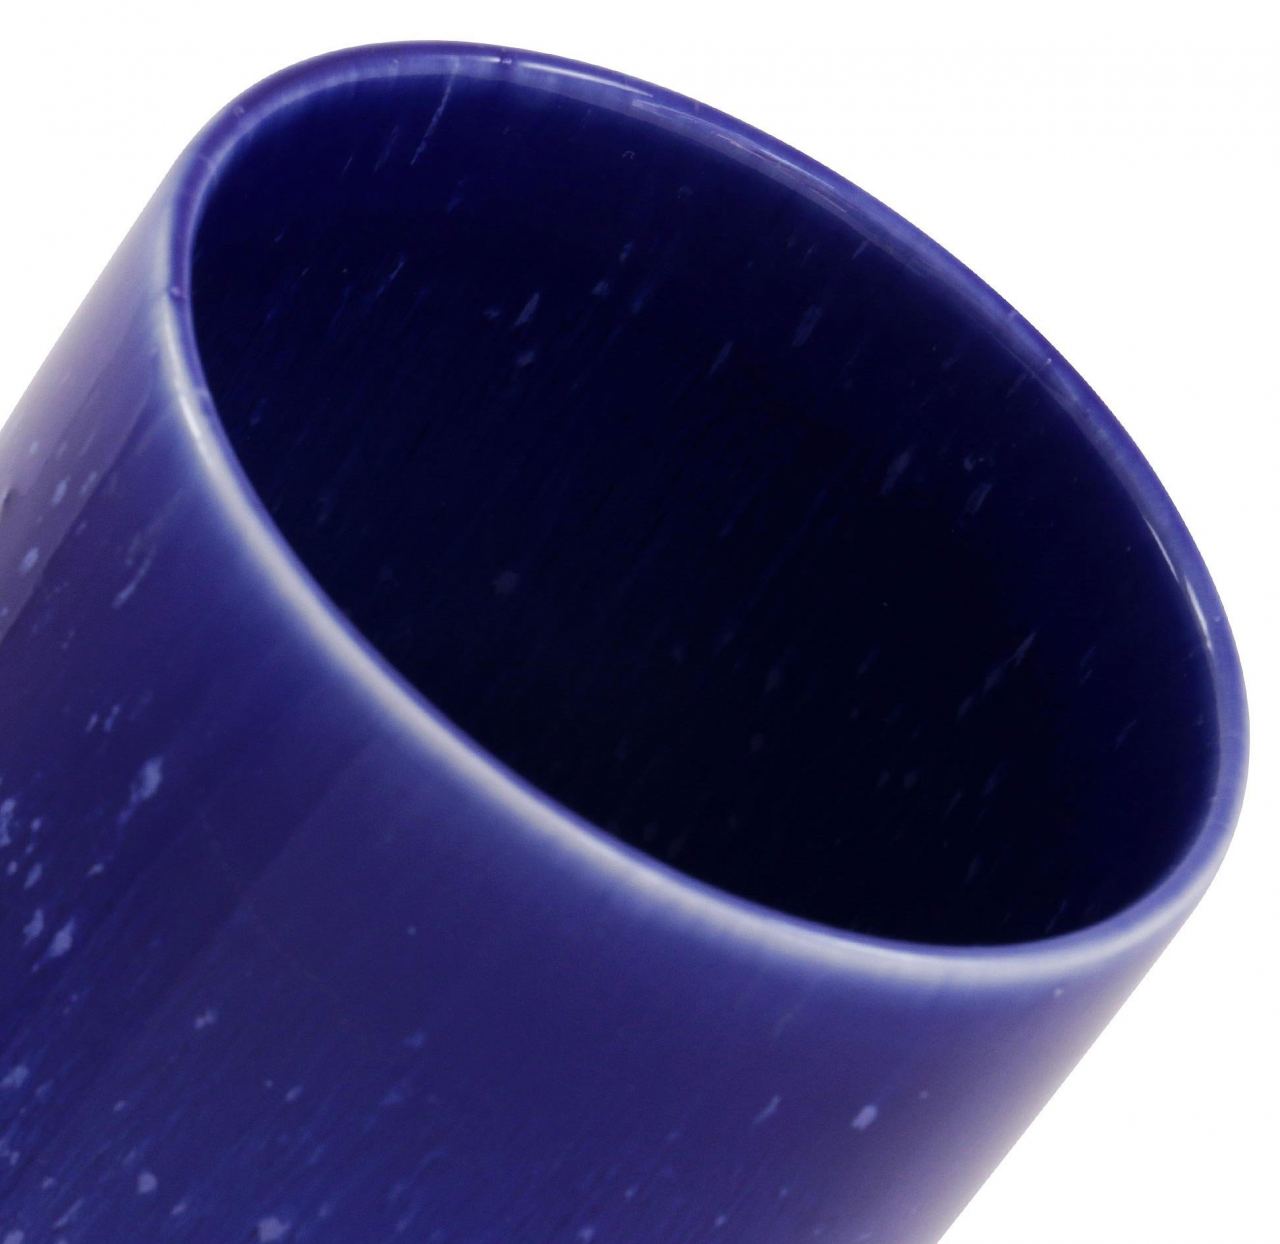 Slurp Cup Ultramarine